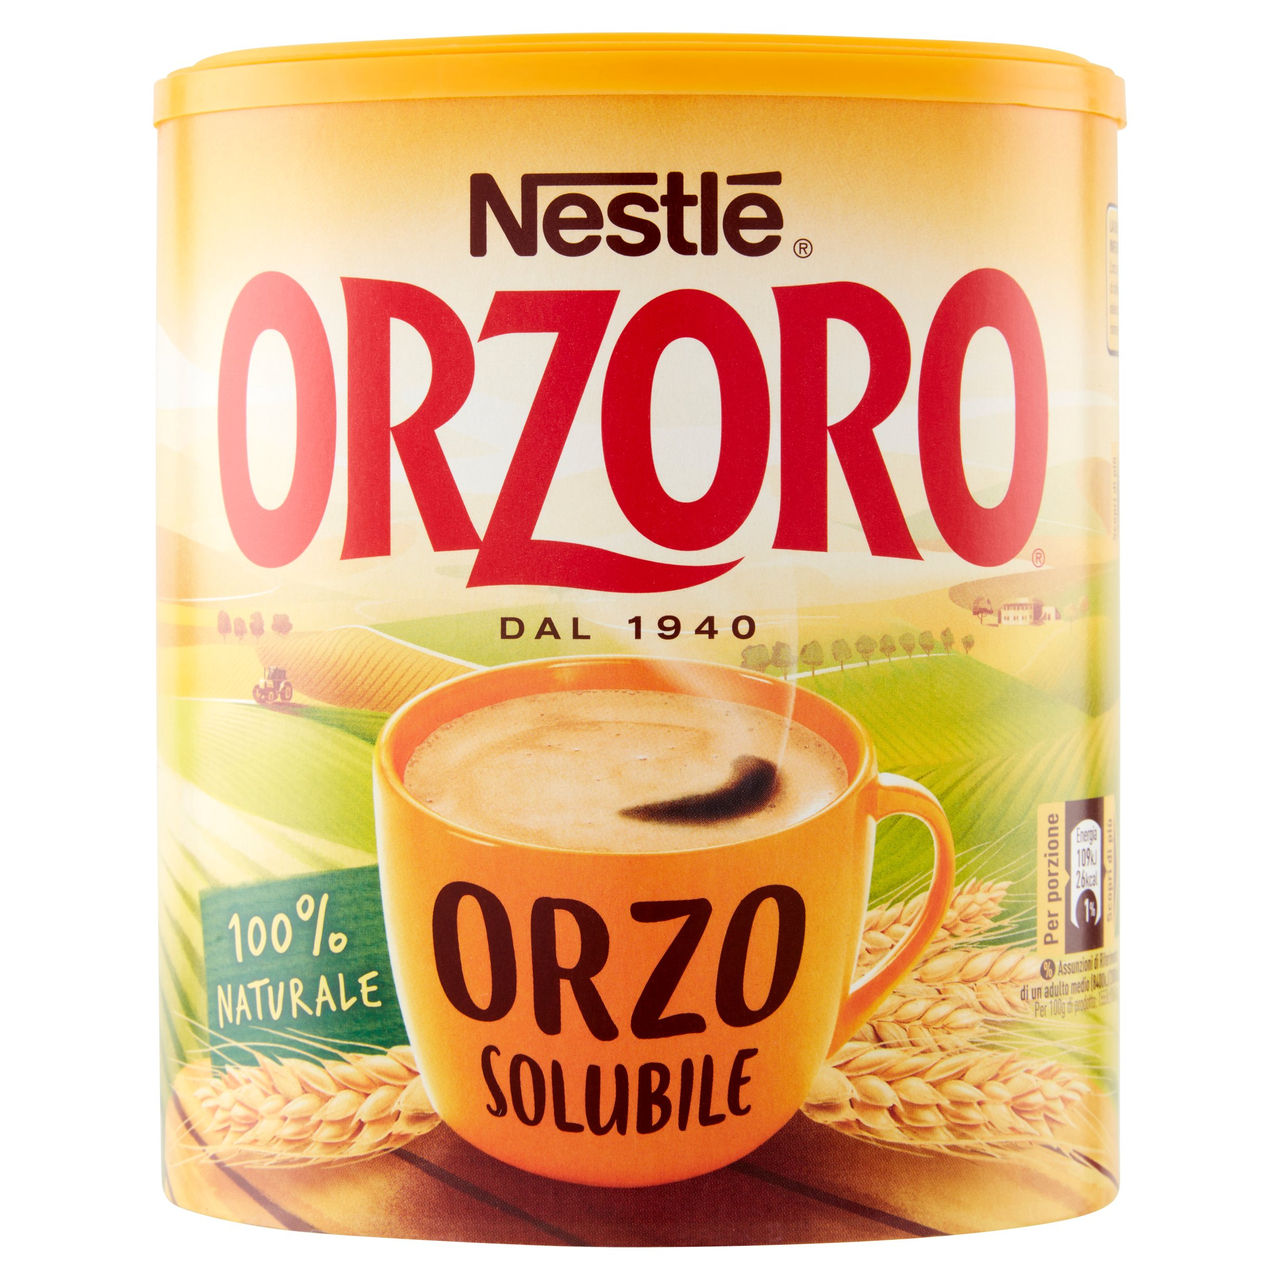 Nestlé Orzoro Orzo Solubile in vendita online